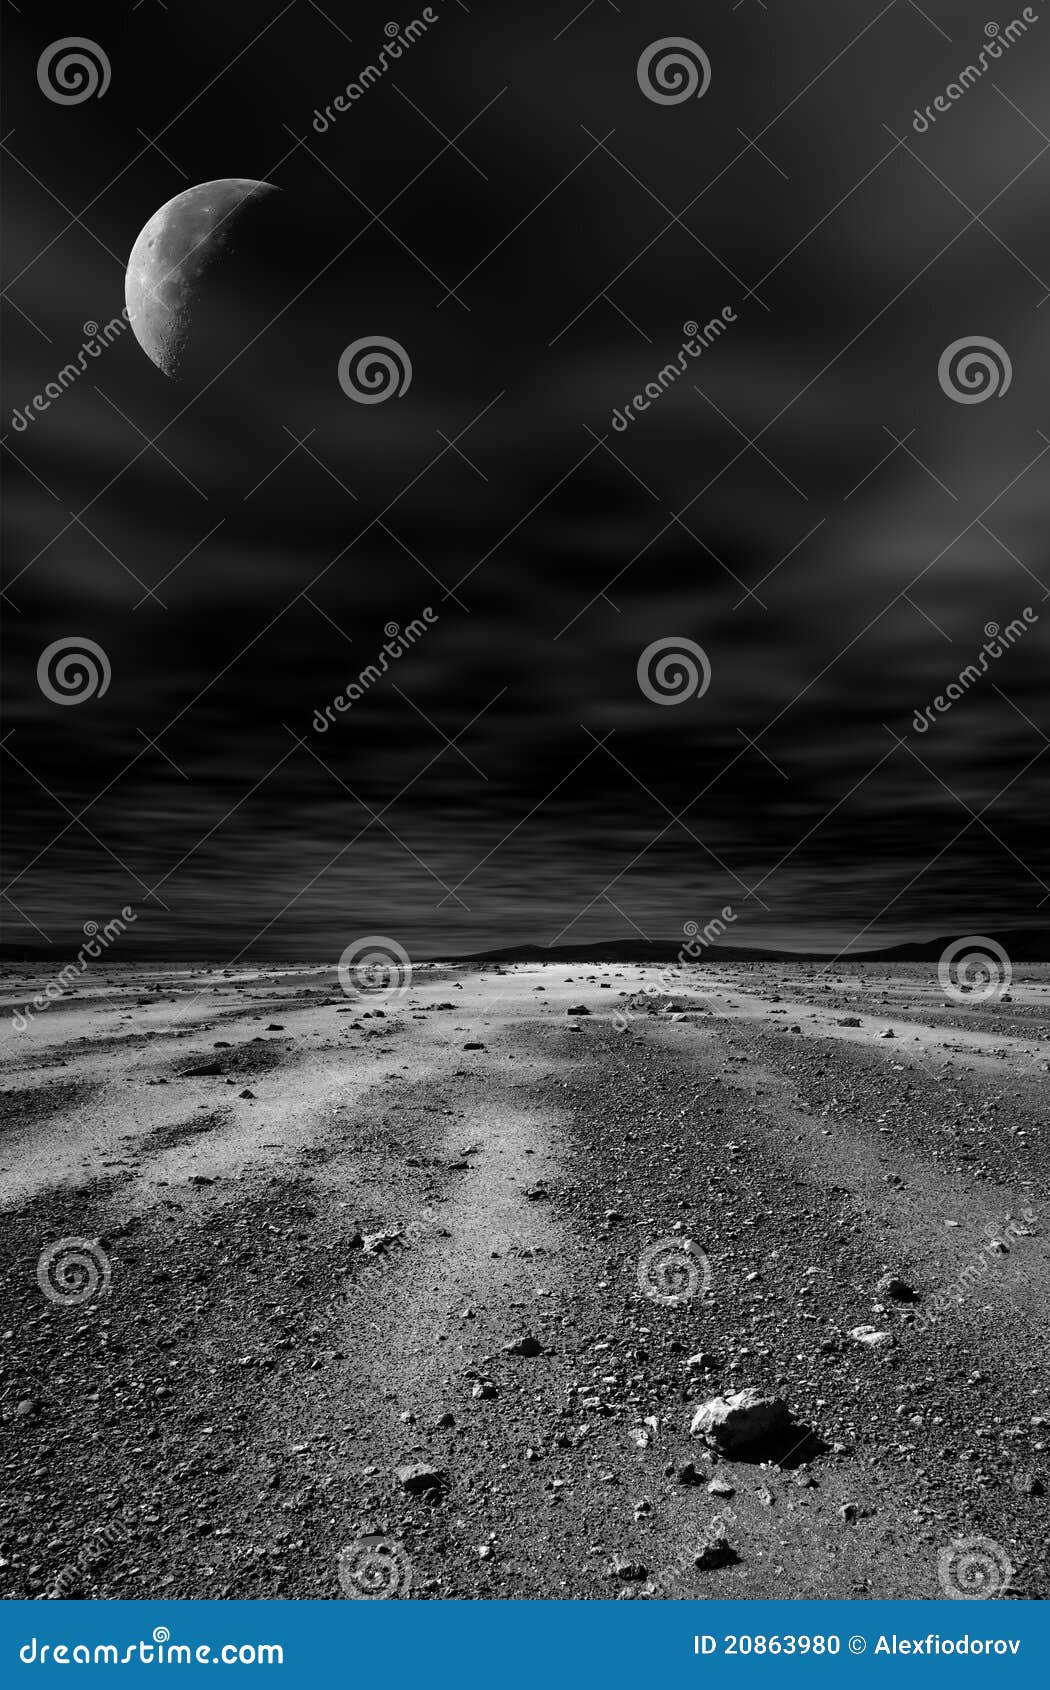 night stony desert.